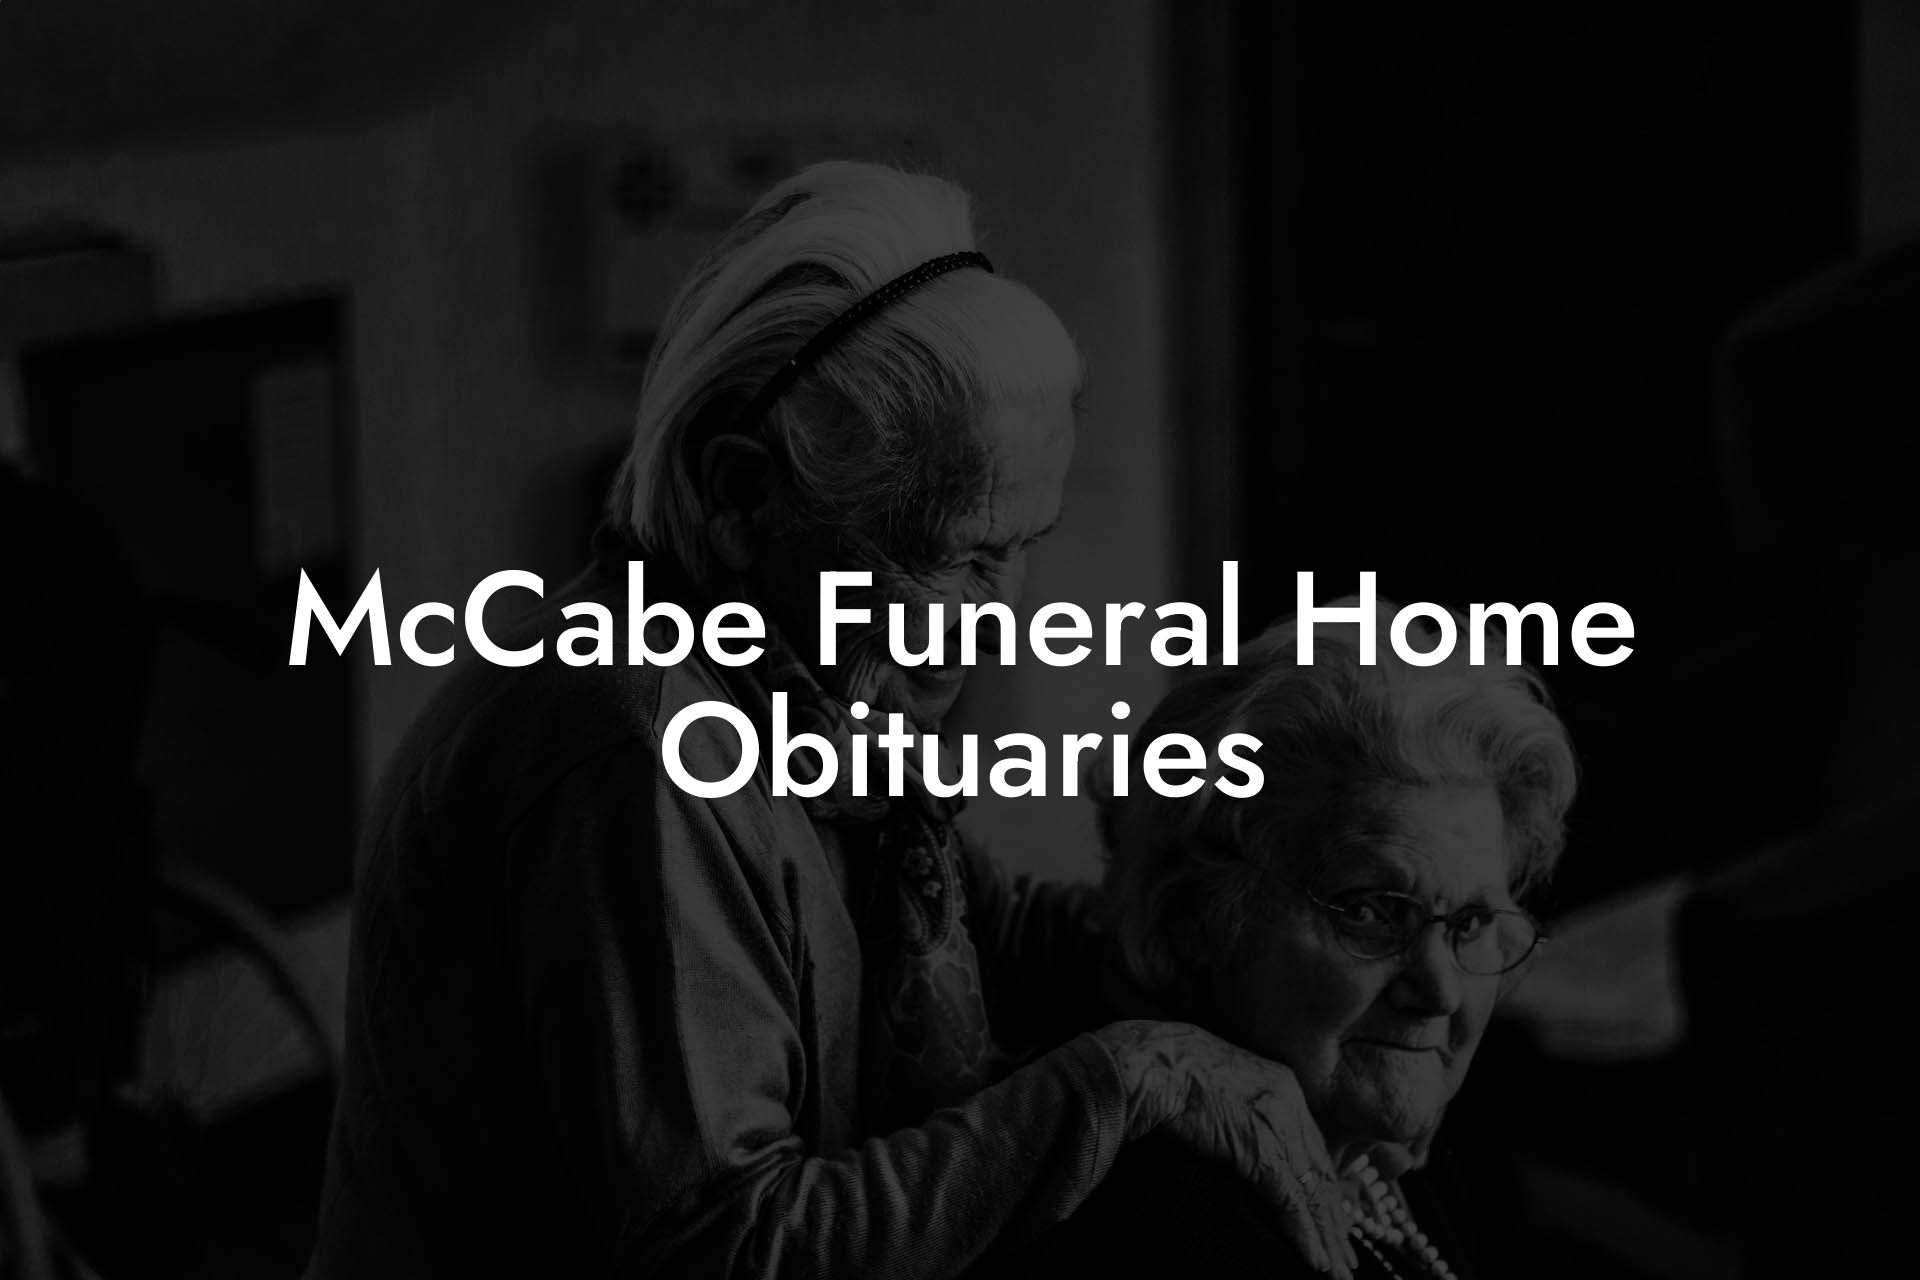 McCabe Funeral Home Obituaries